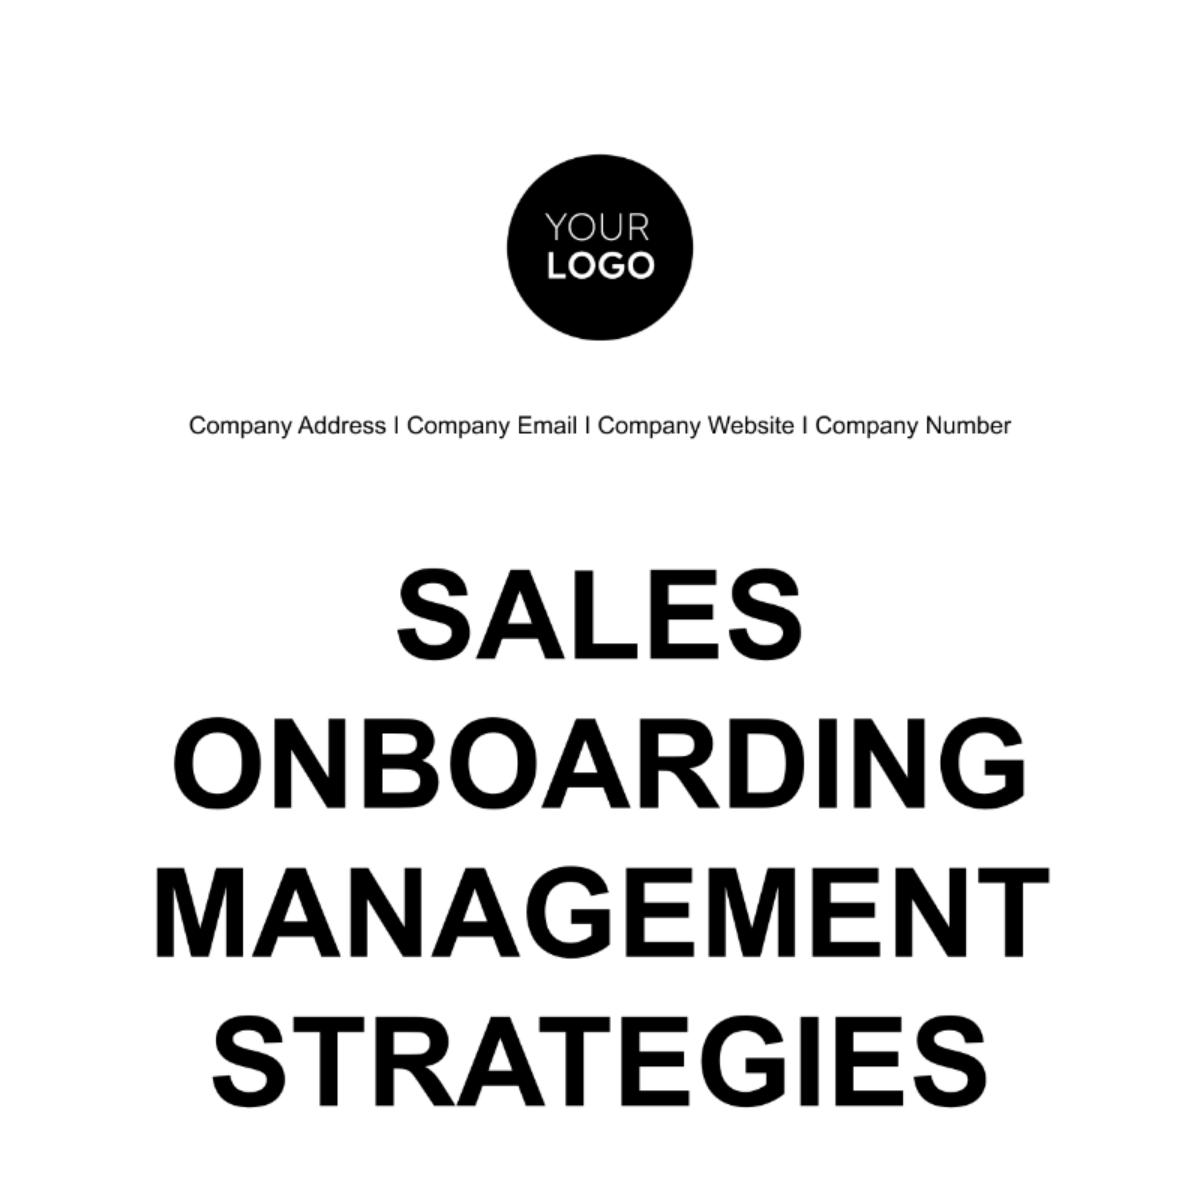 Sales Onboarding Management Strategies Template